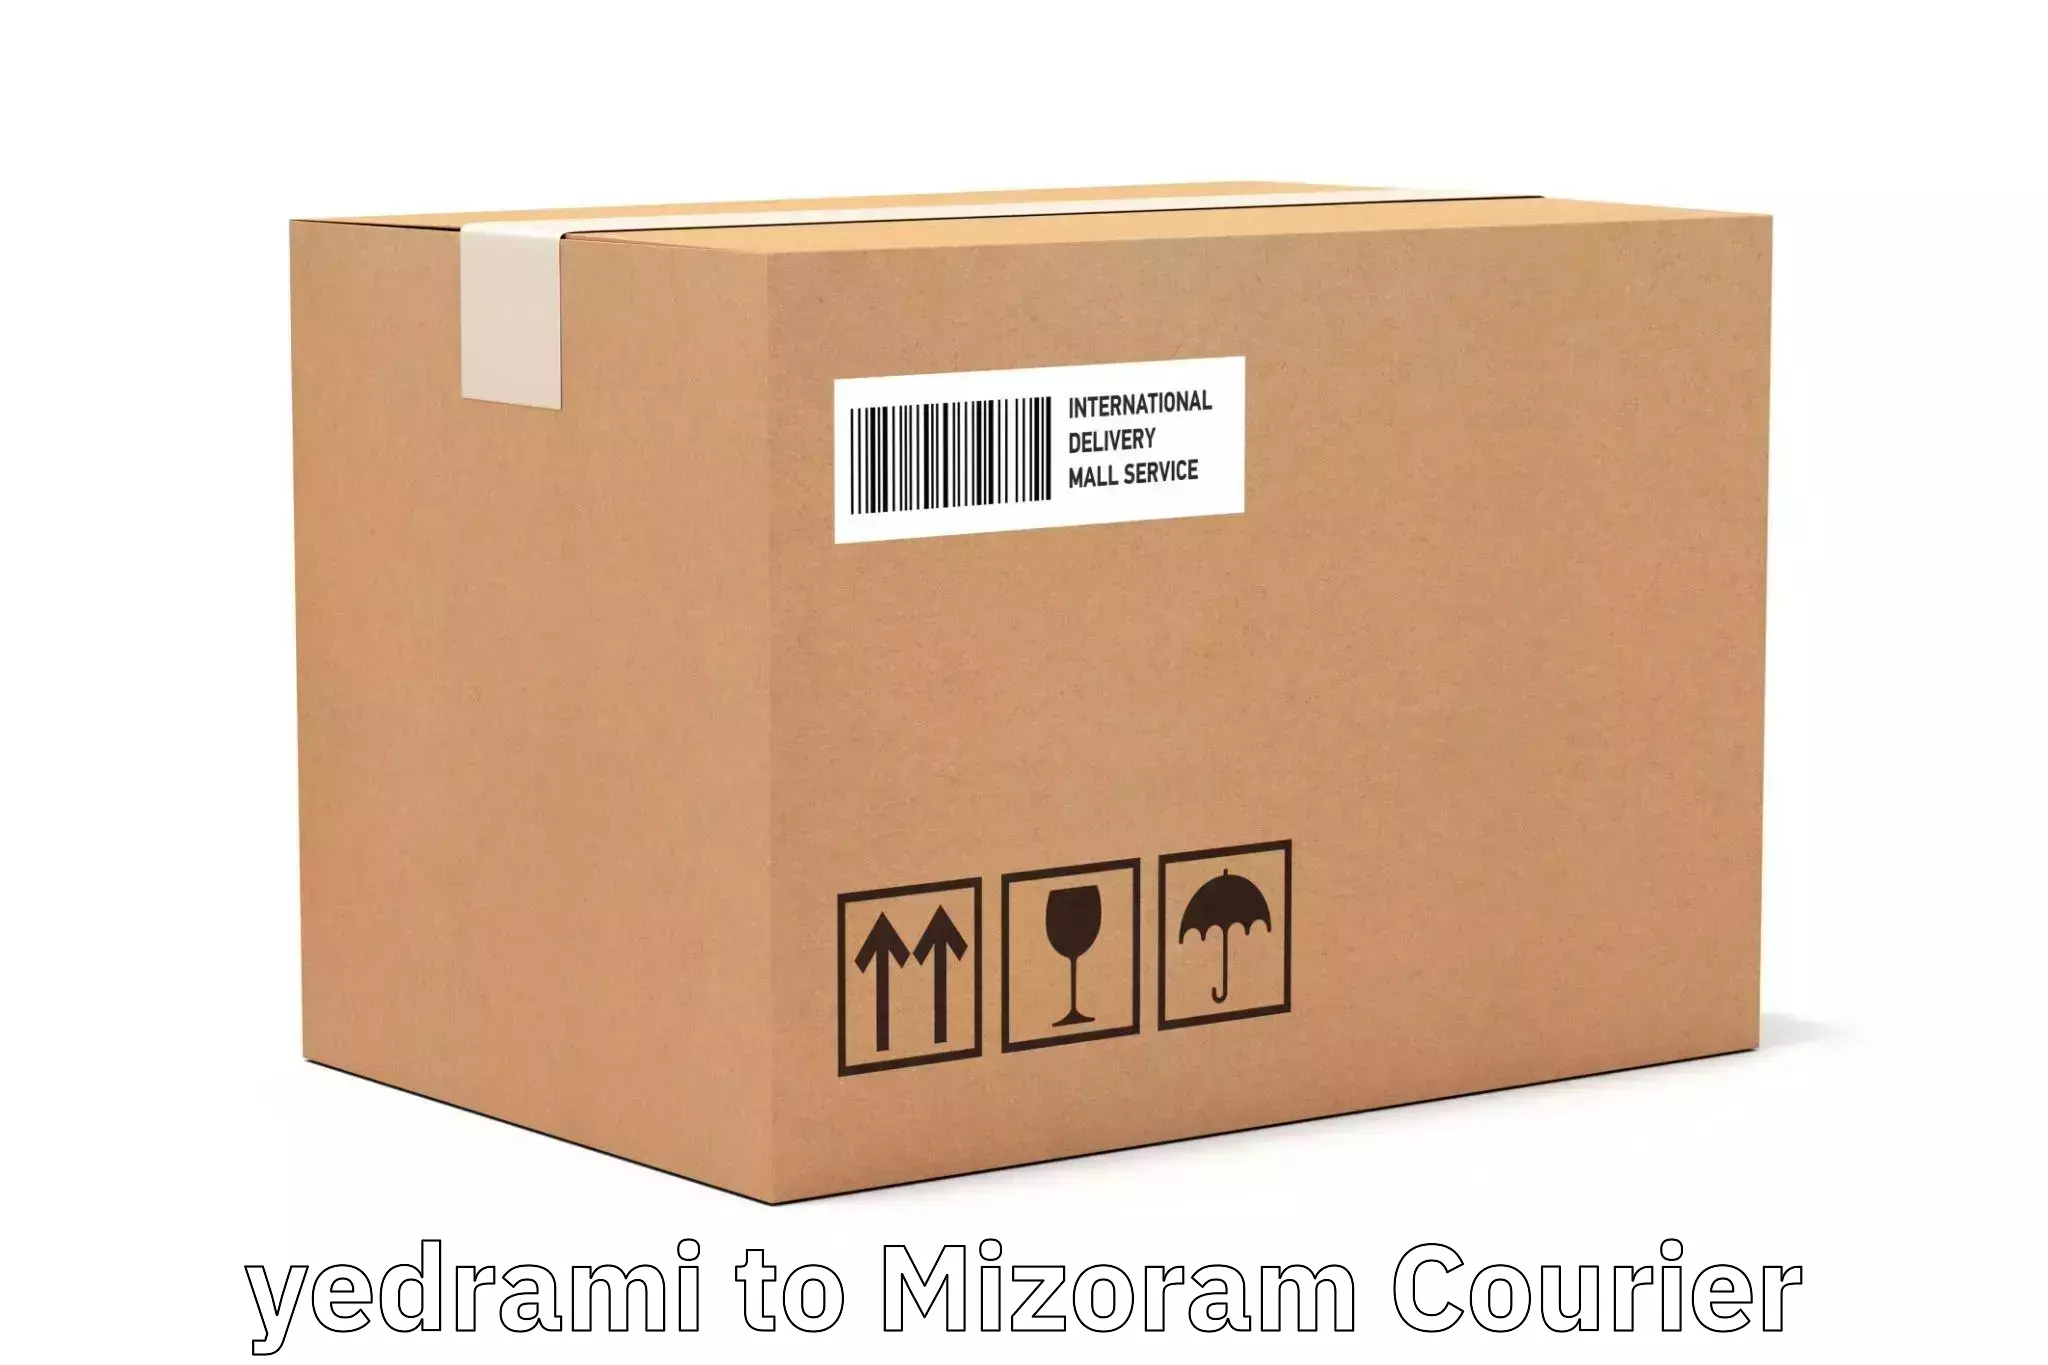 Next-generation courier services yedrami to Mizoram